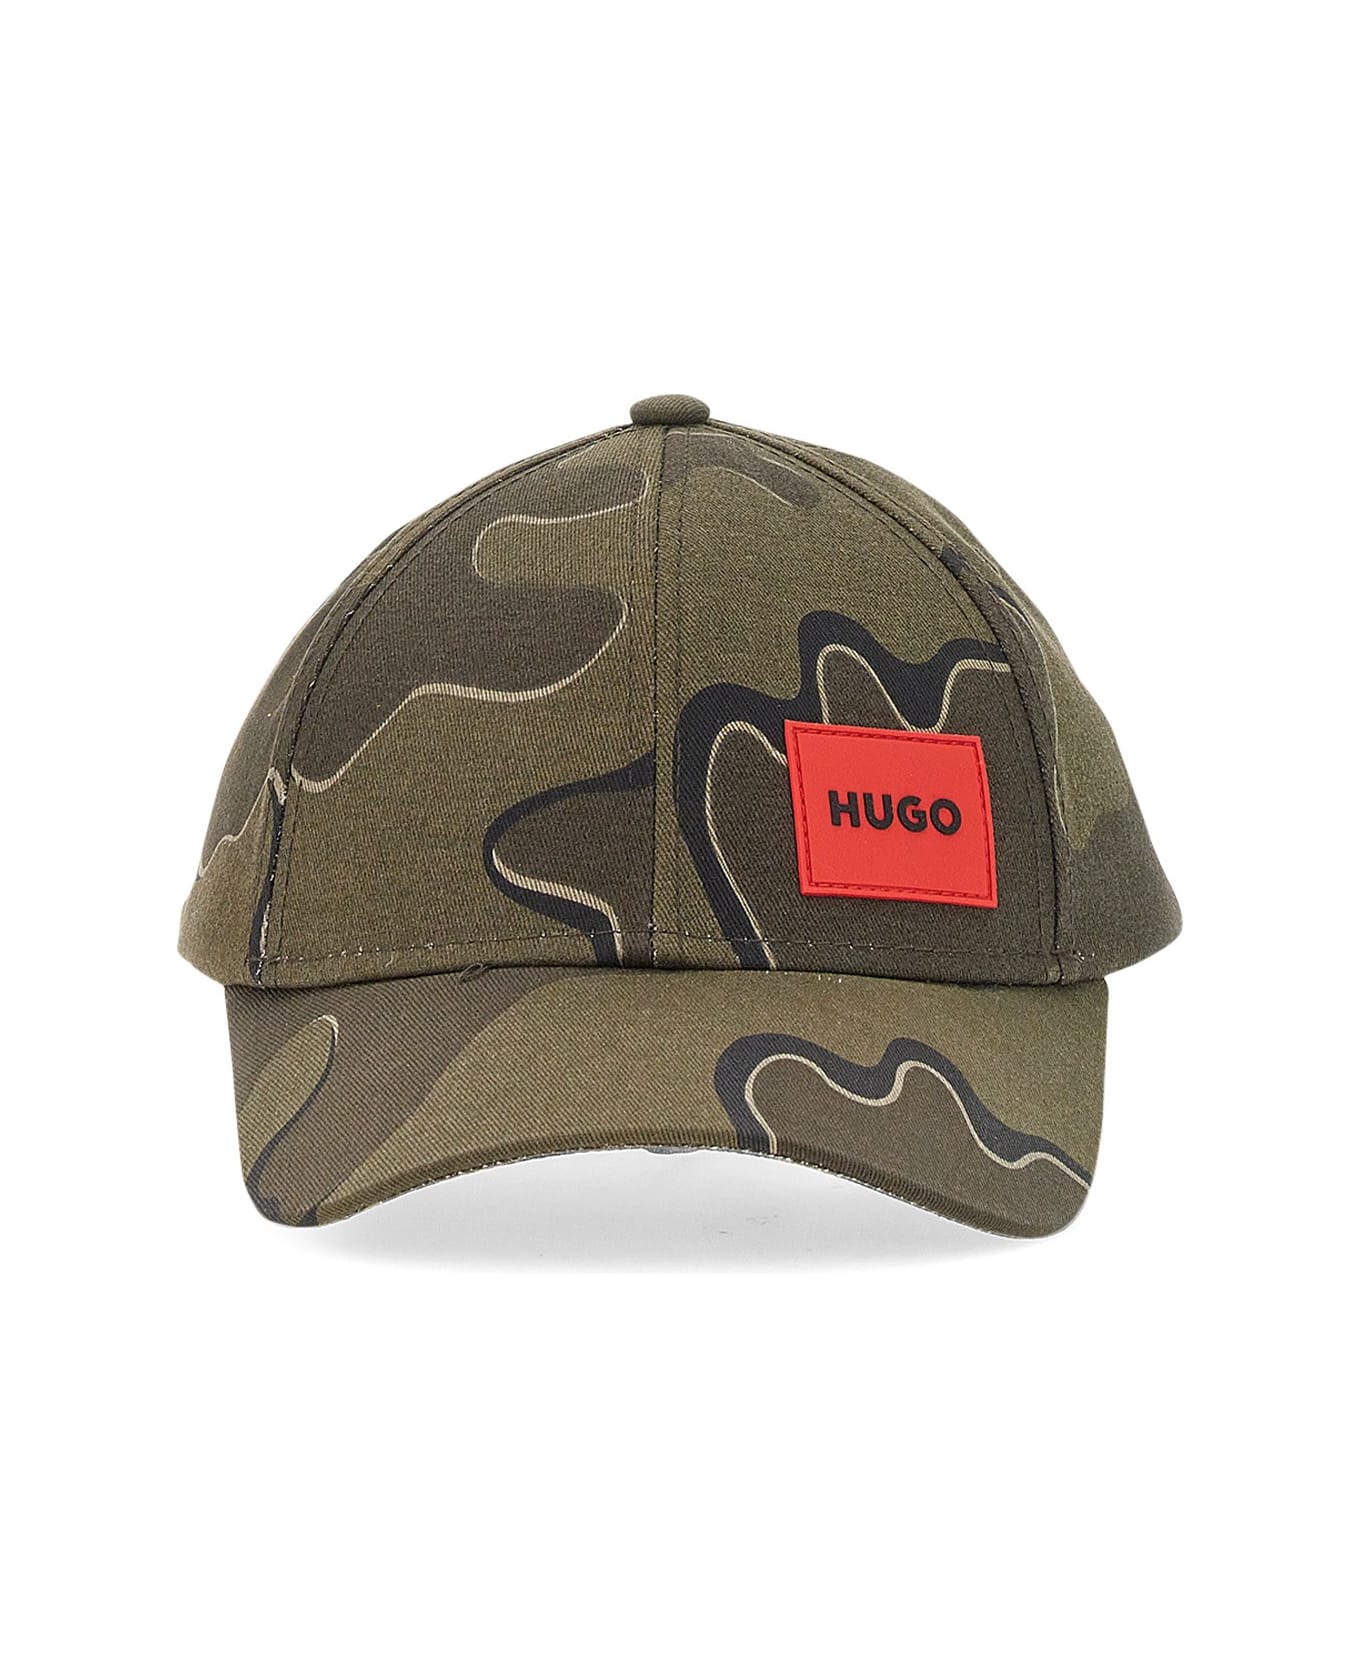 Hugo Boss Baseball Hat With Logo - MILITARE